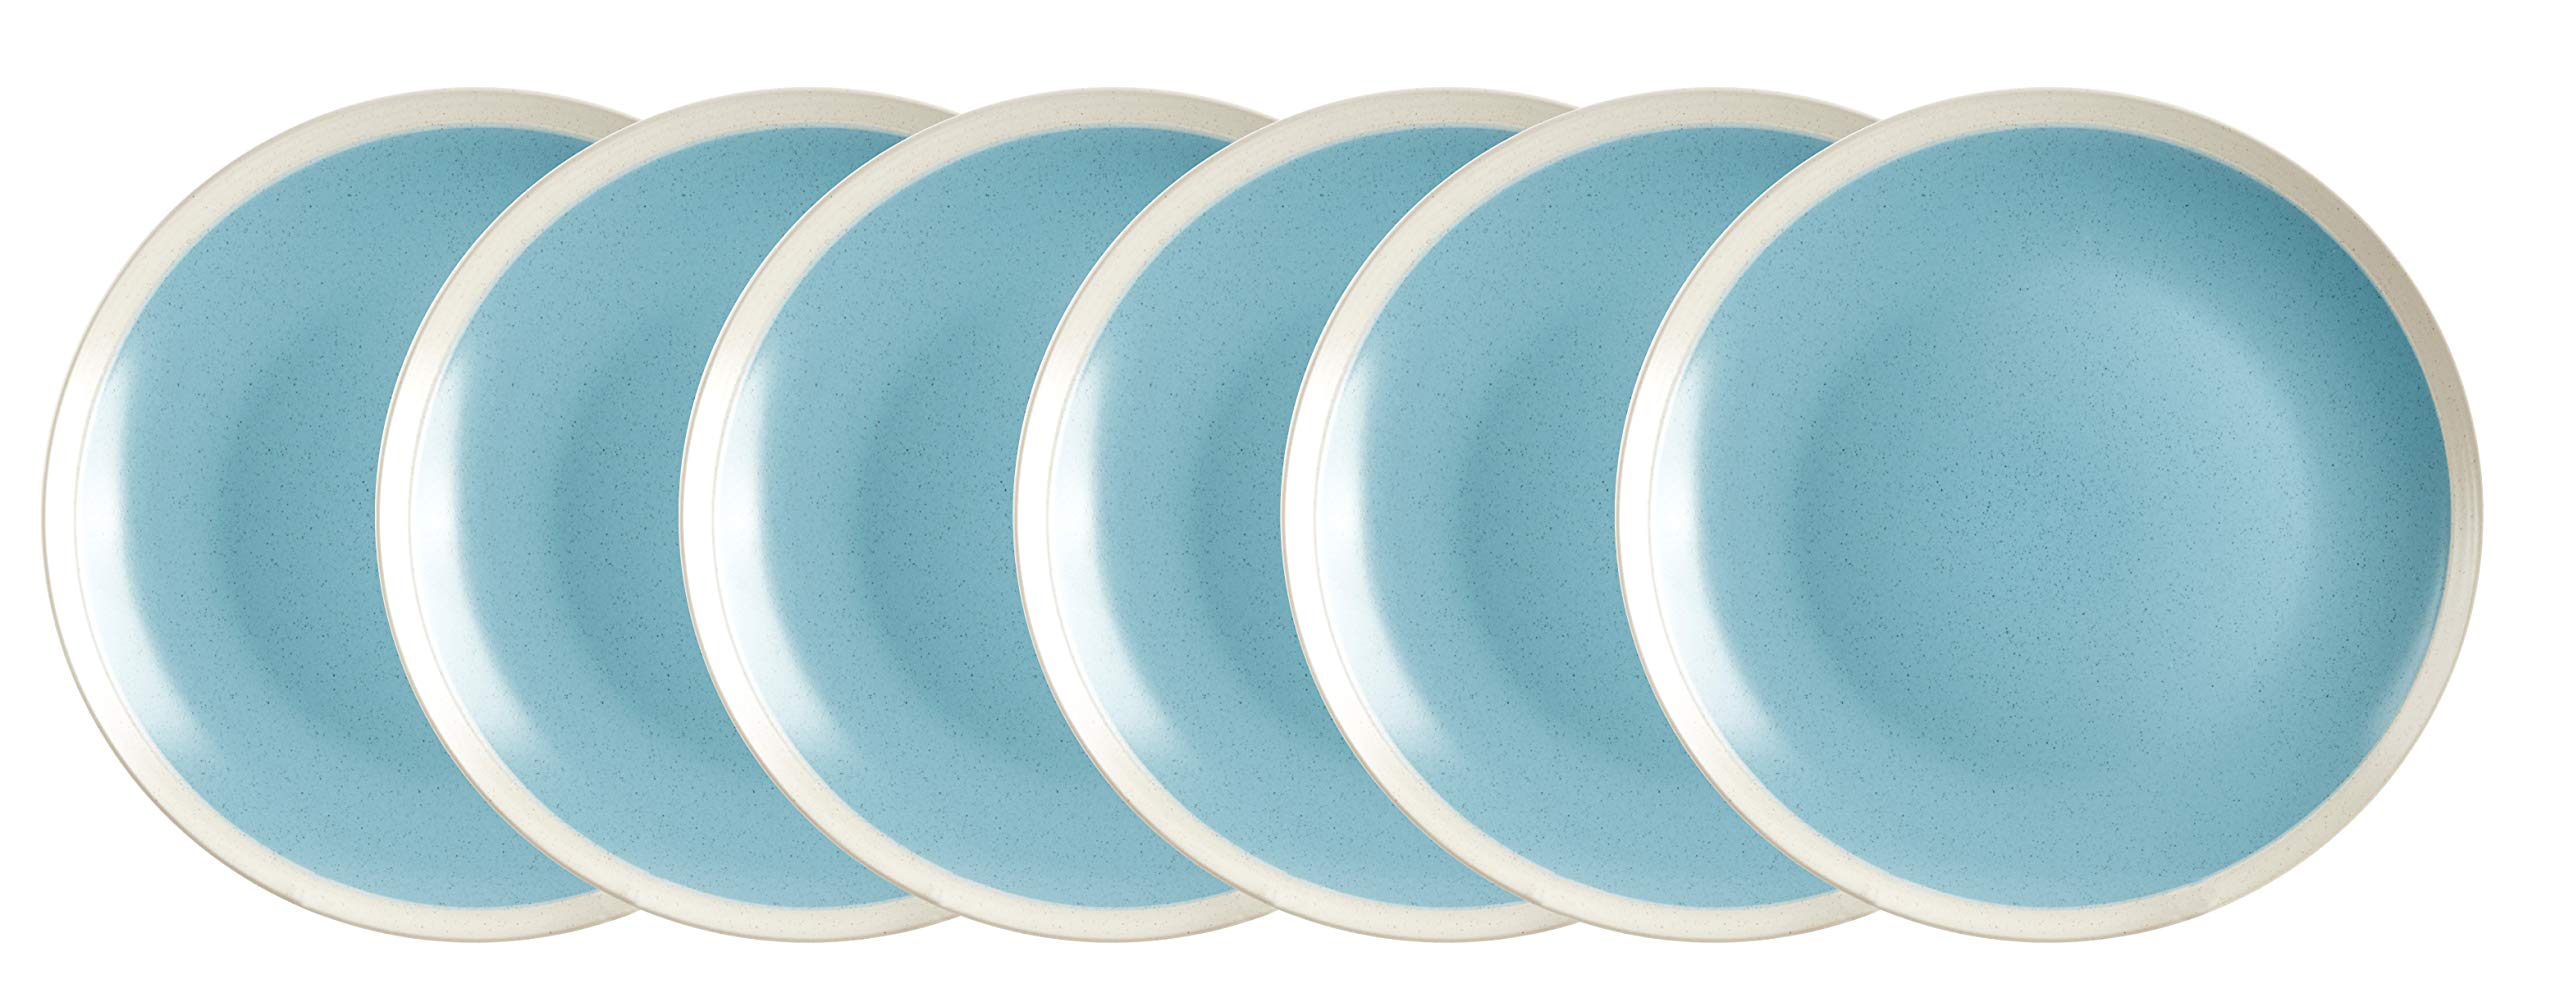 HomeVss Rock Ridge Speckled Stoneware Dinnerware Set (18pc Set, Turquoise and Ivory)